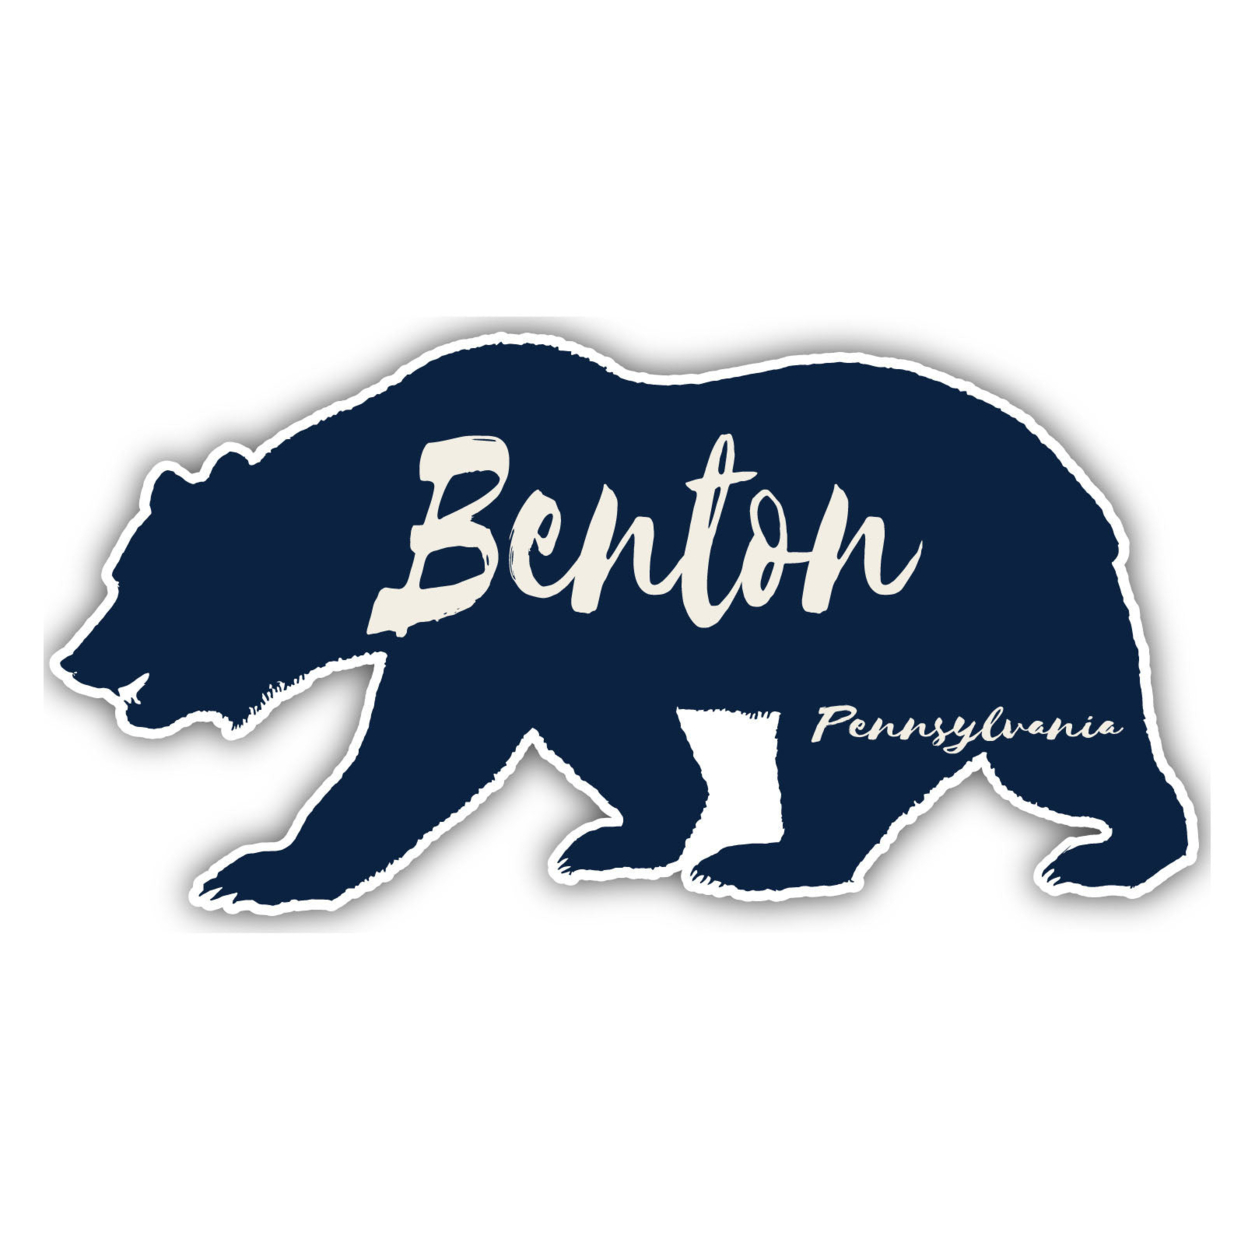 Benton Pennsylvania Souvenir Decorative Stickers (Choose Theme And Size) - Single Unit, 10-Inch, Bear